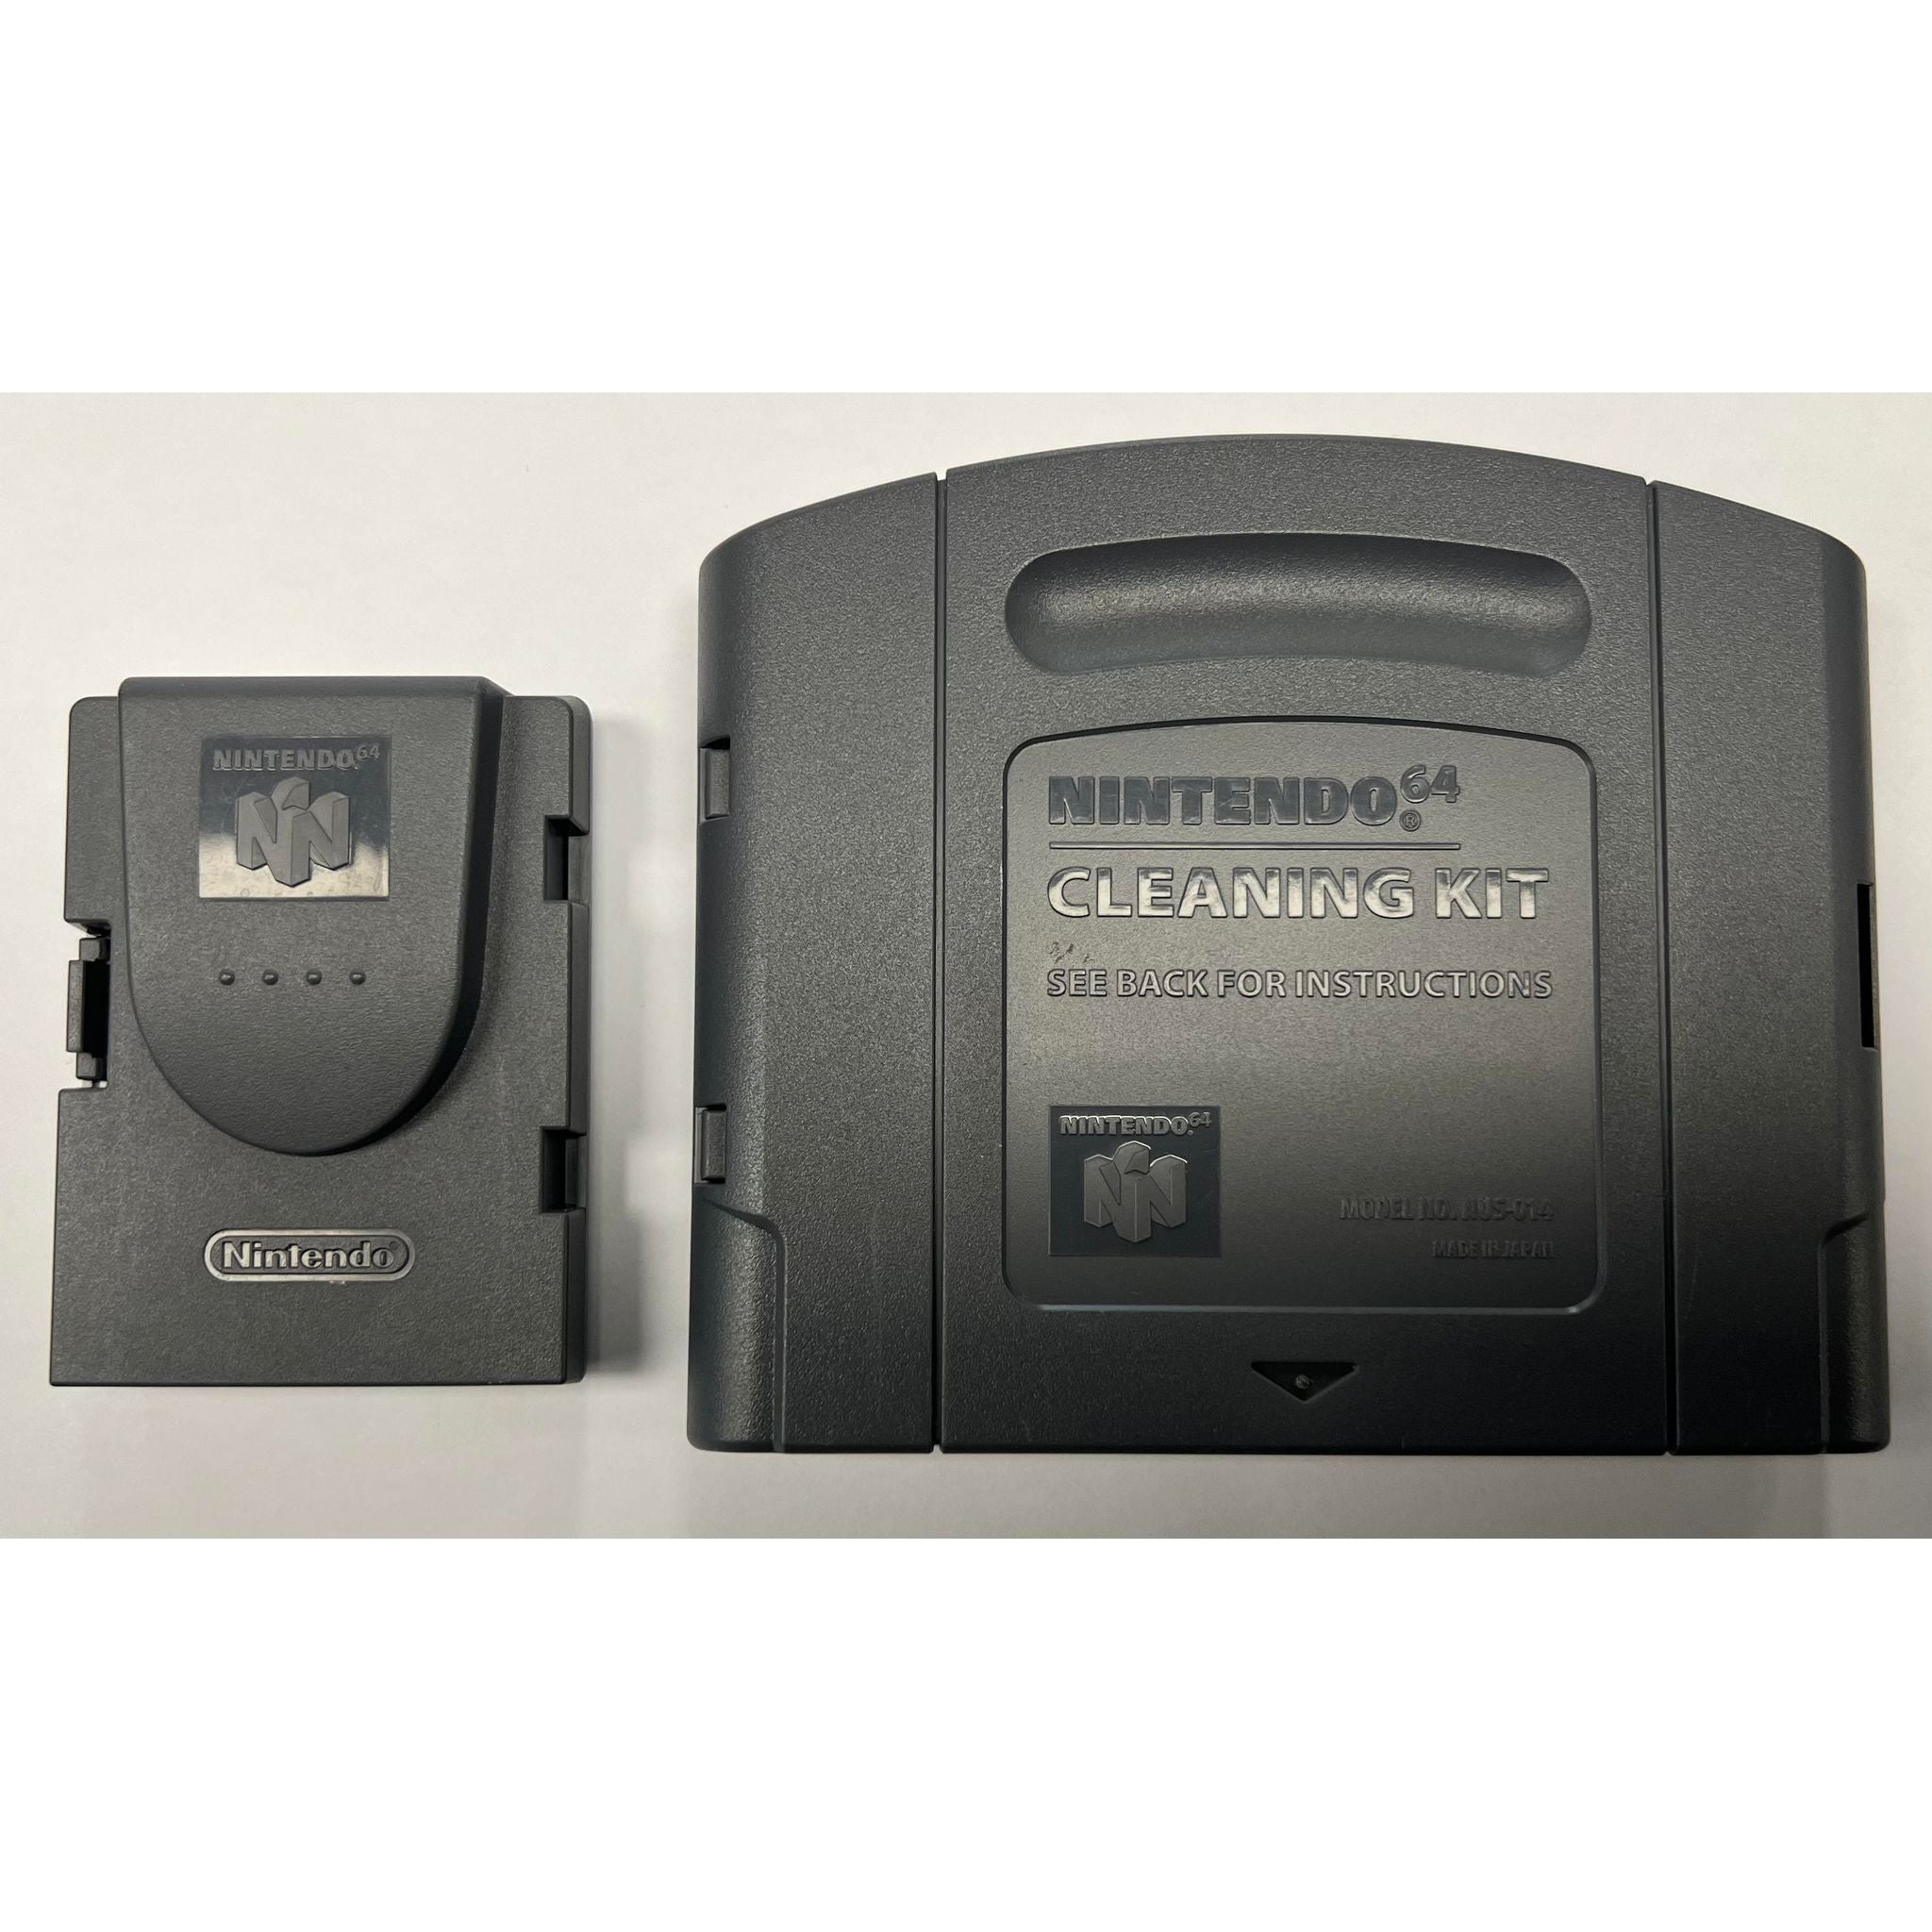 Kit de nettoyage Nintendo 64 (N64) (marque Nintendo) (hors boîte)